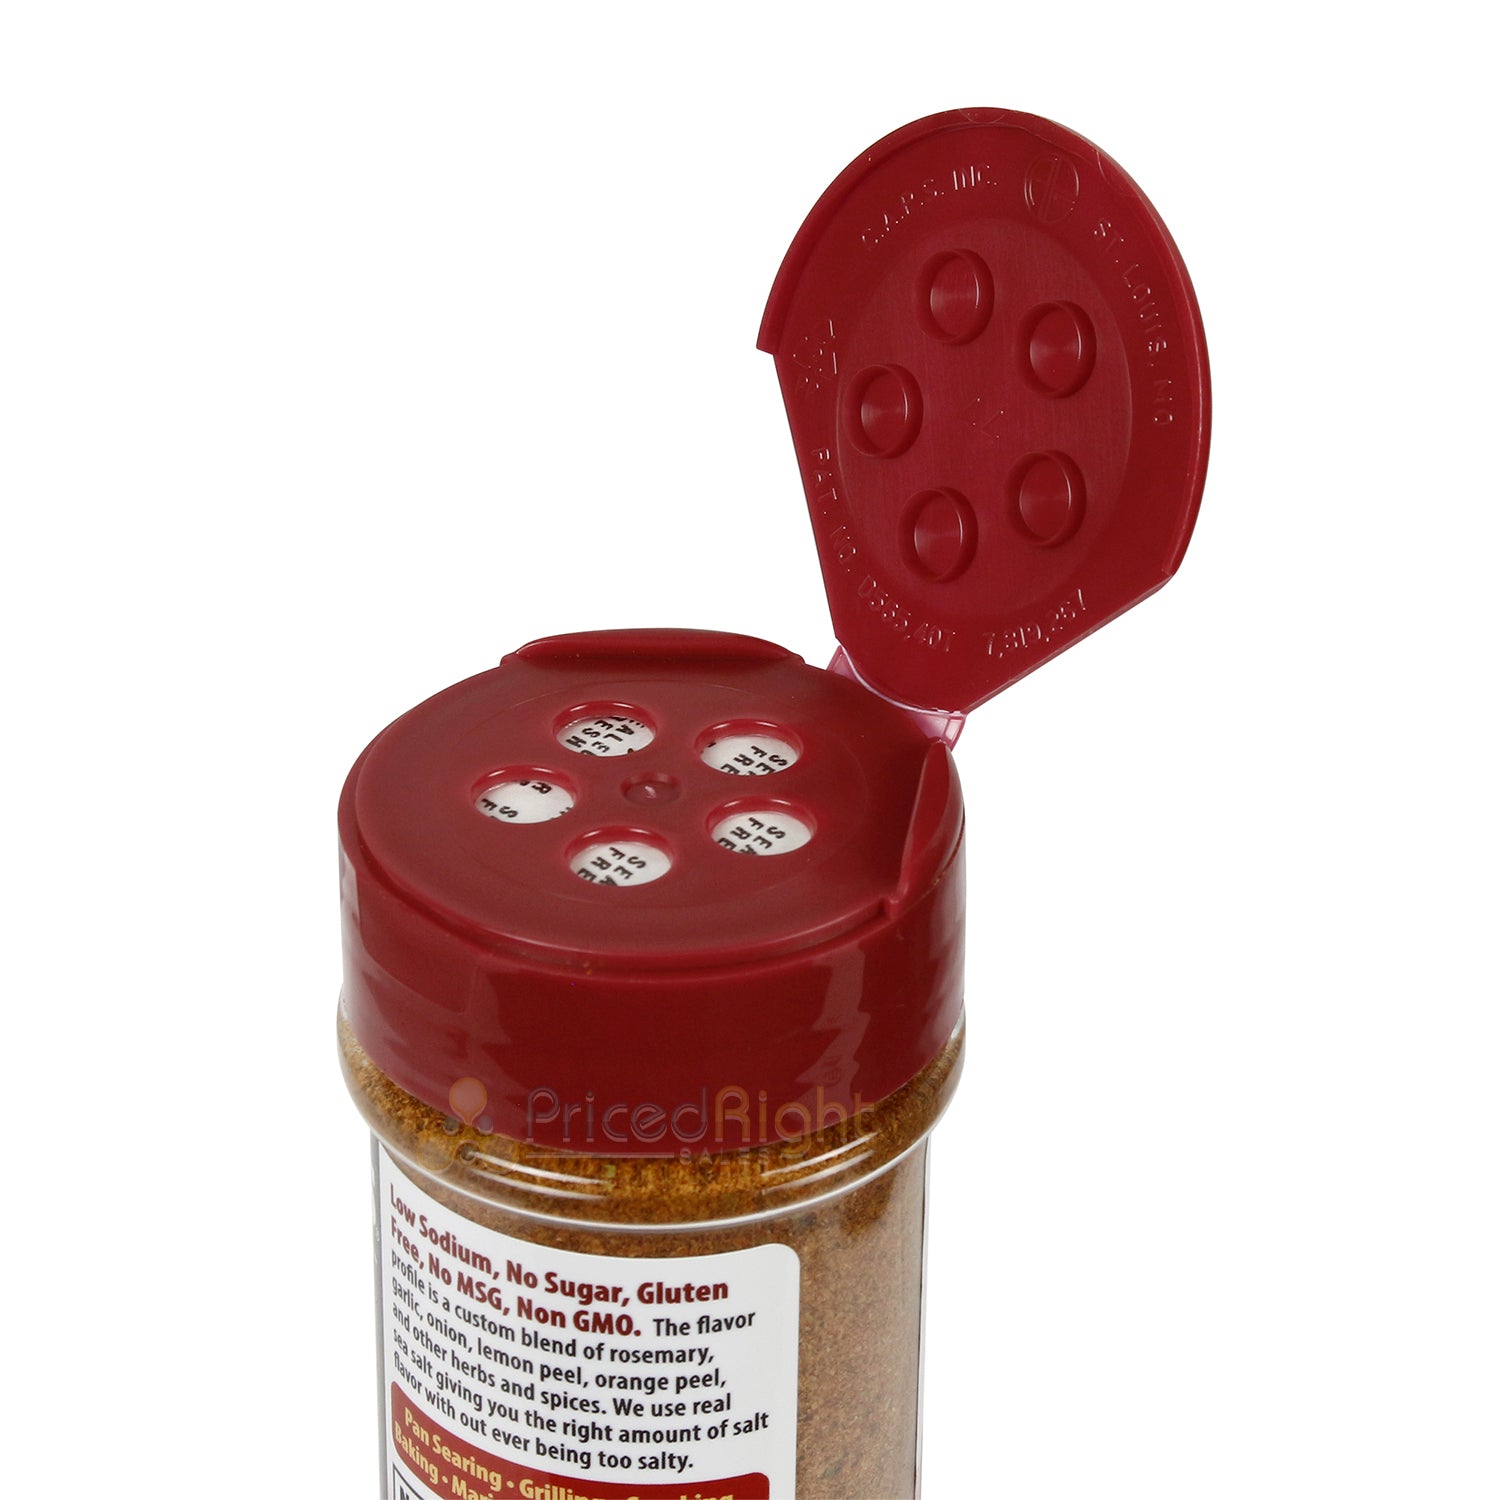 Dan-O's Seasoning Spicy | Small Bottle | 1 Pack (3.5 oz)